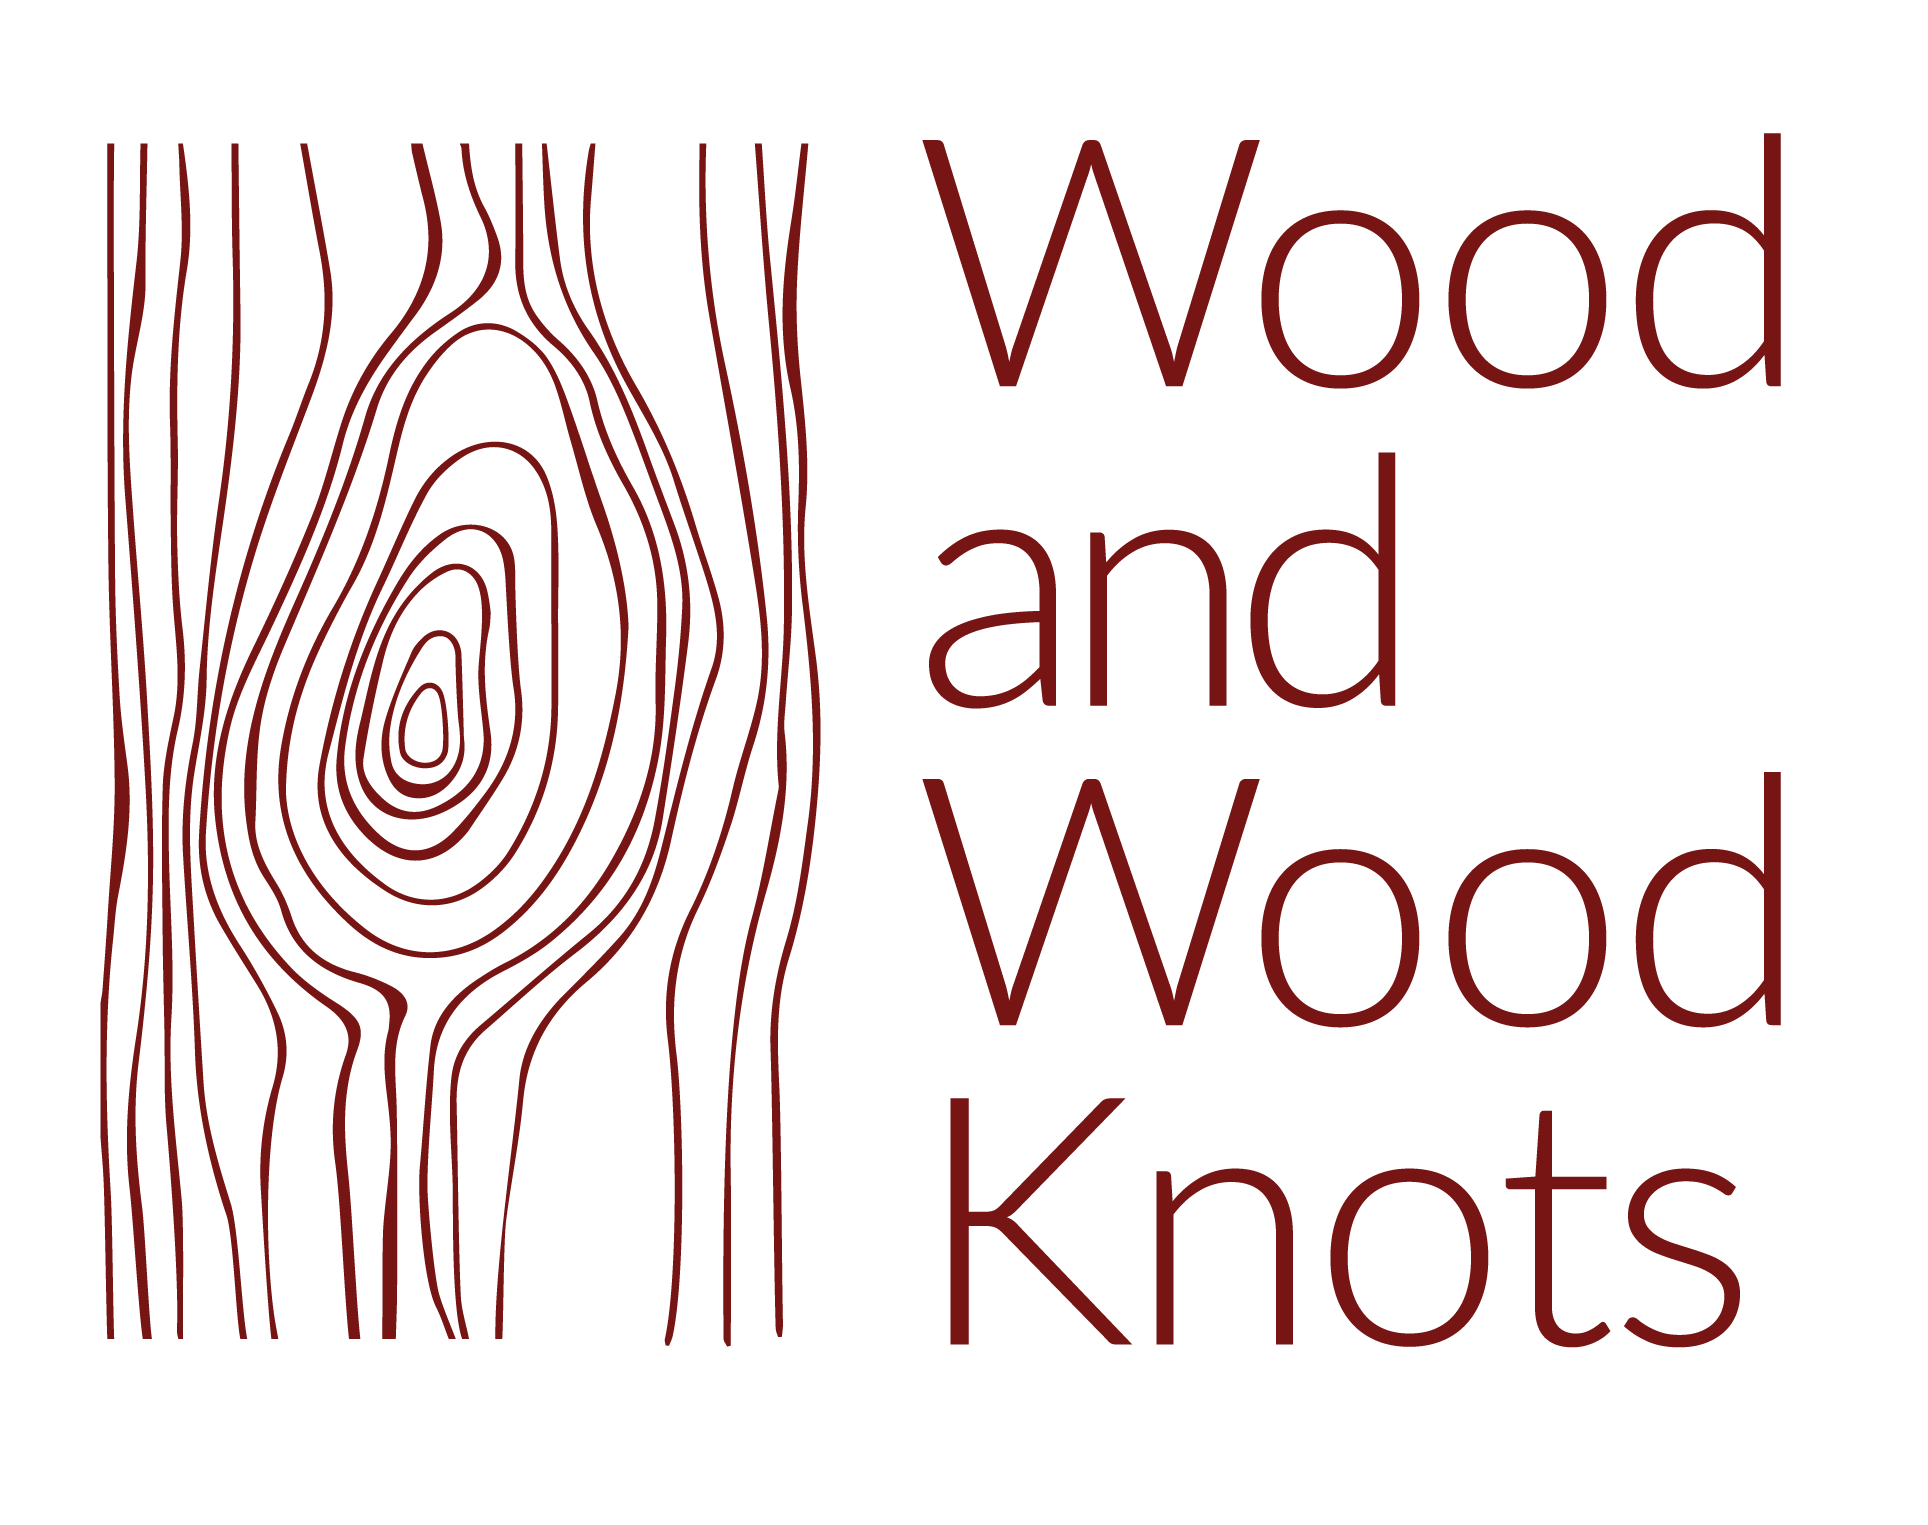 Wood and Wood Knots